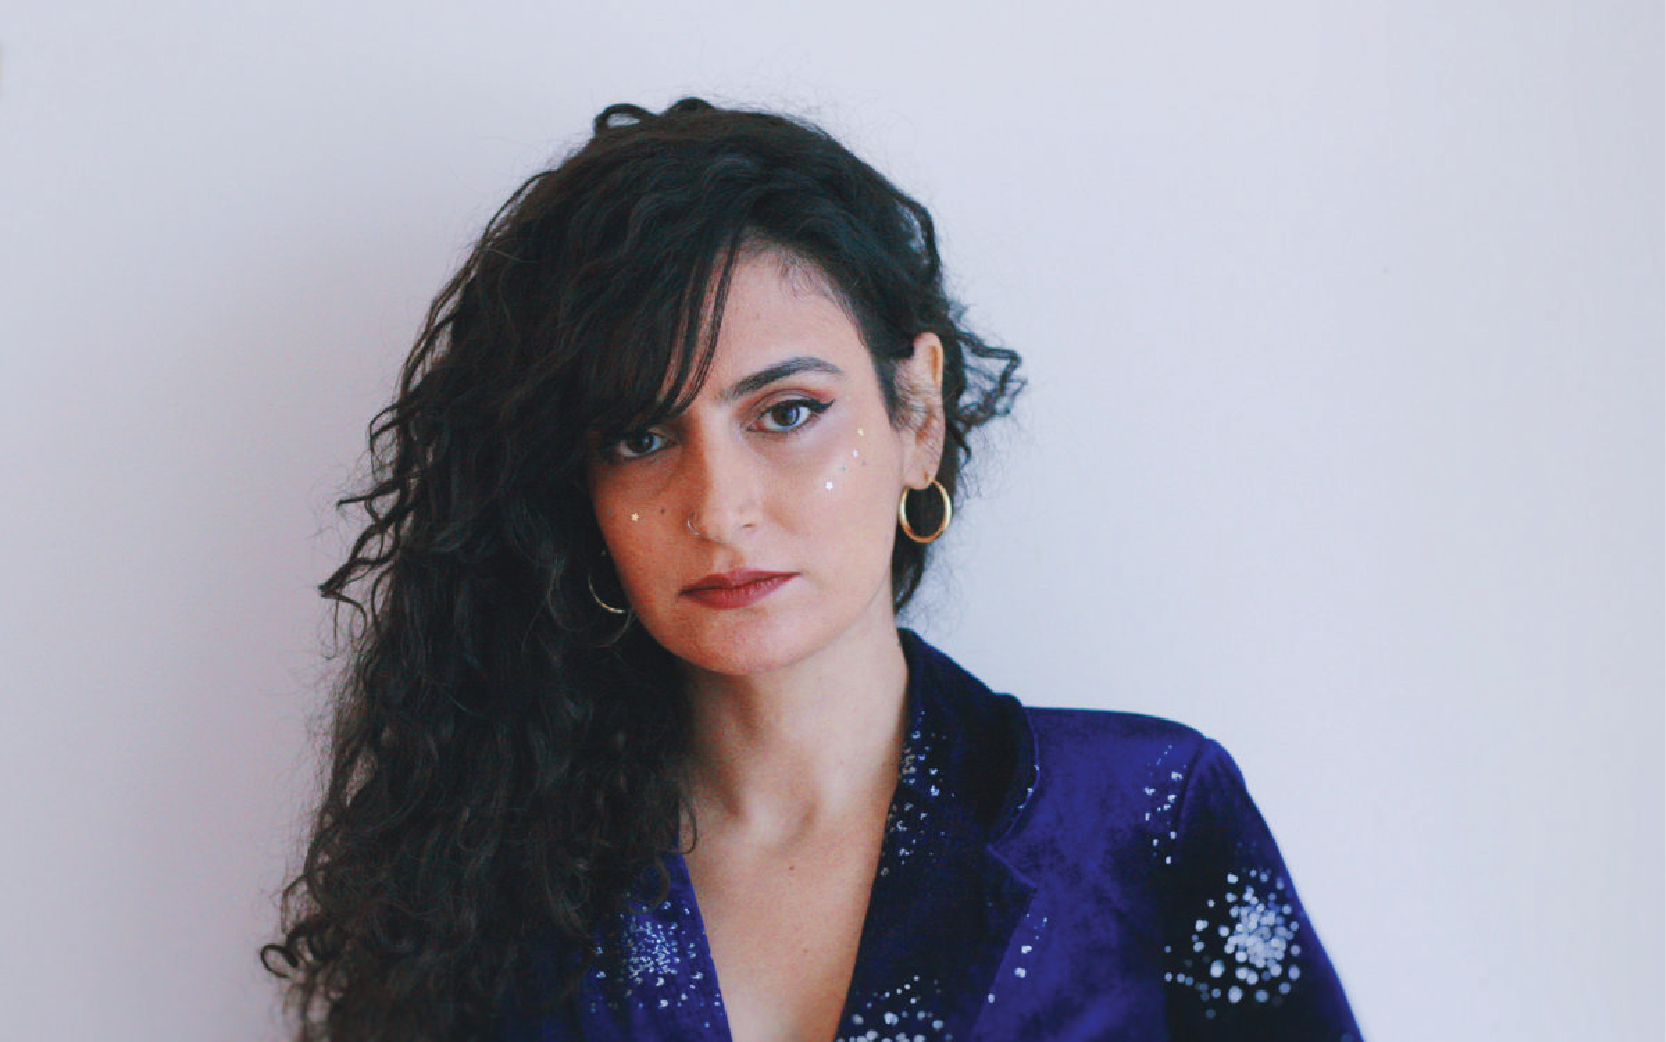 London-Based Palestinian Artist Ruba Shamshoum Gives Glimpse of Upcoming LP with New Single ‘Sununu’